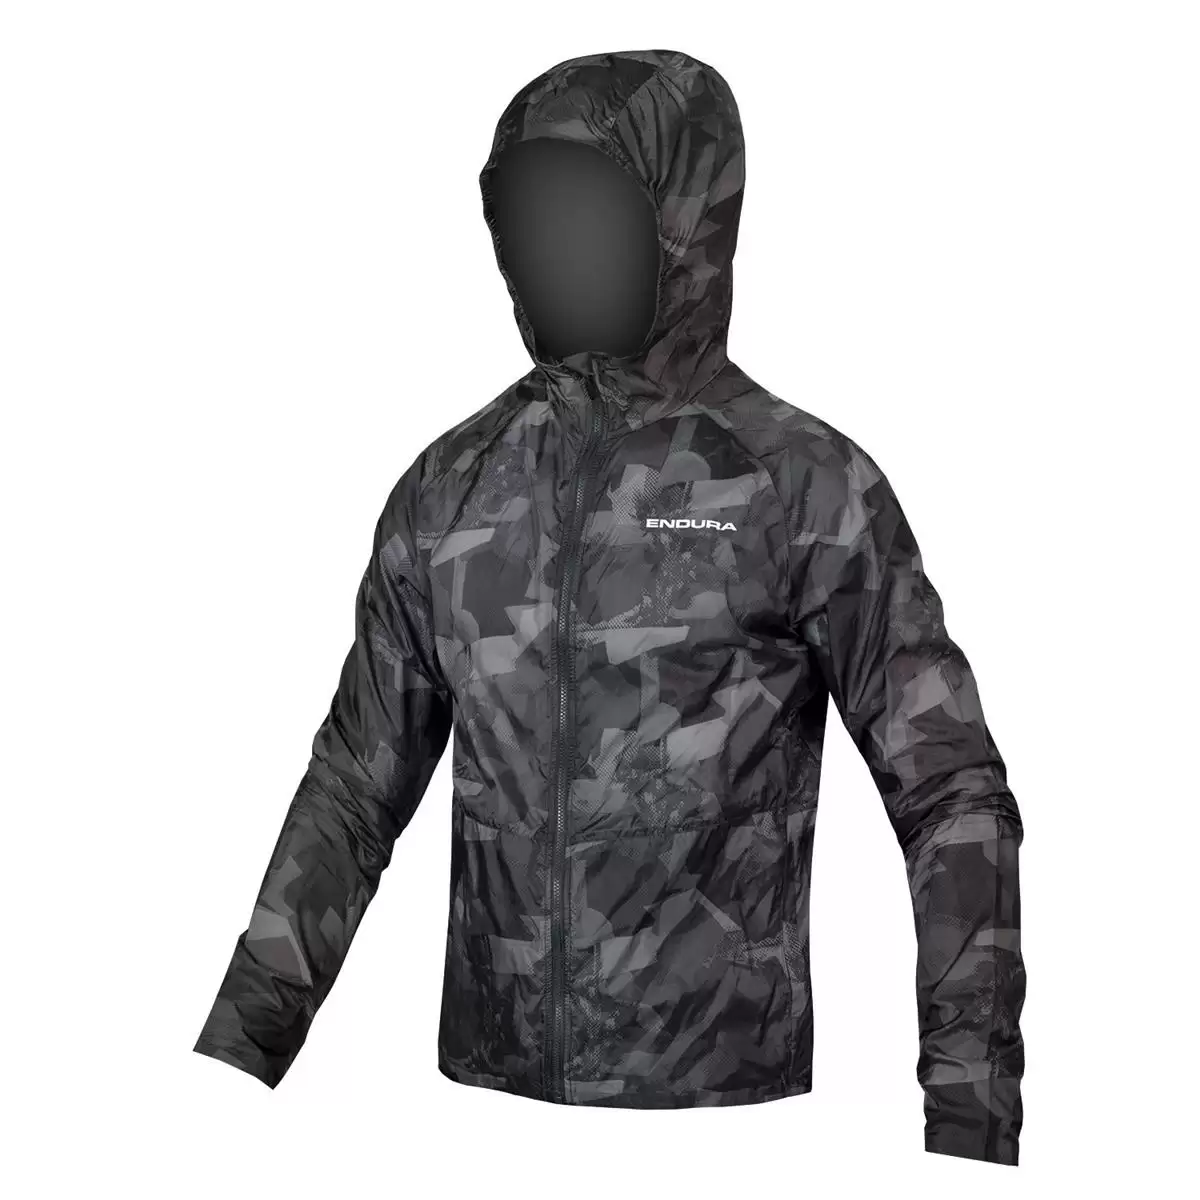 SingleTrack Durajak windproof jacket gray size S - image